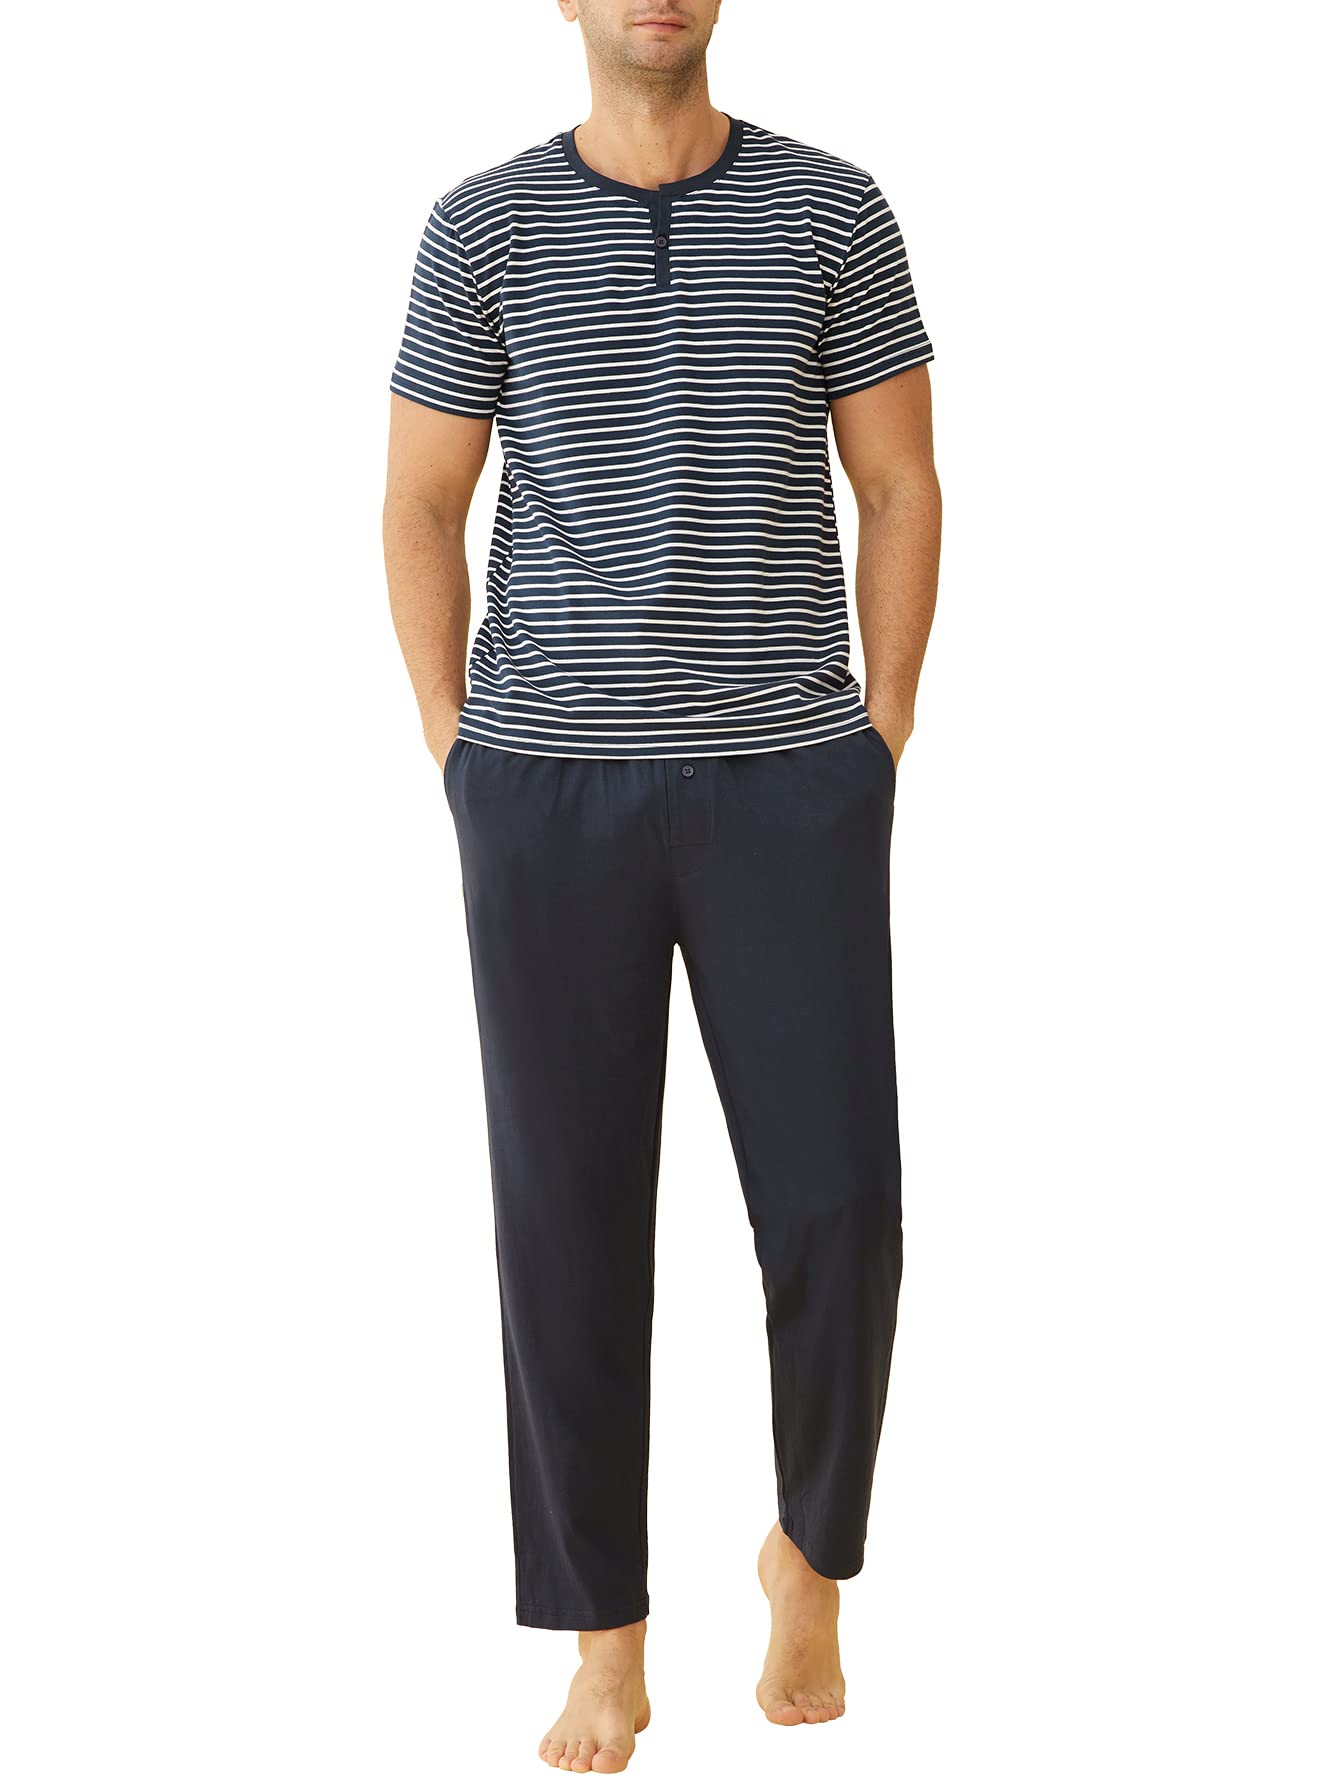 Men's Cotton Pajamas Set Striped Top Sleep Pants with Pockets - Latuza